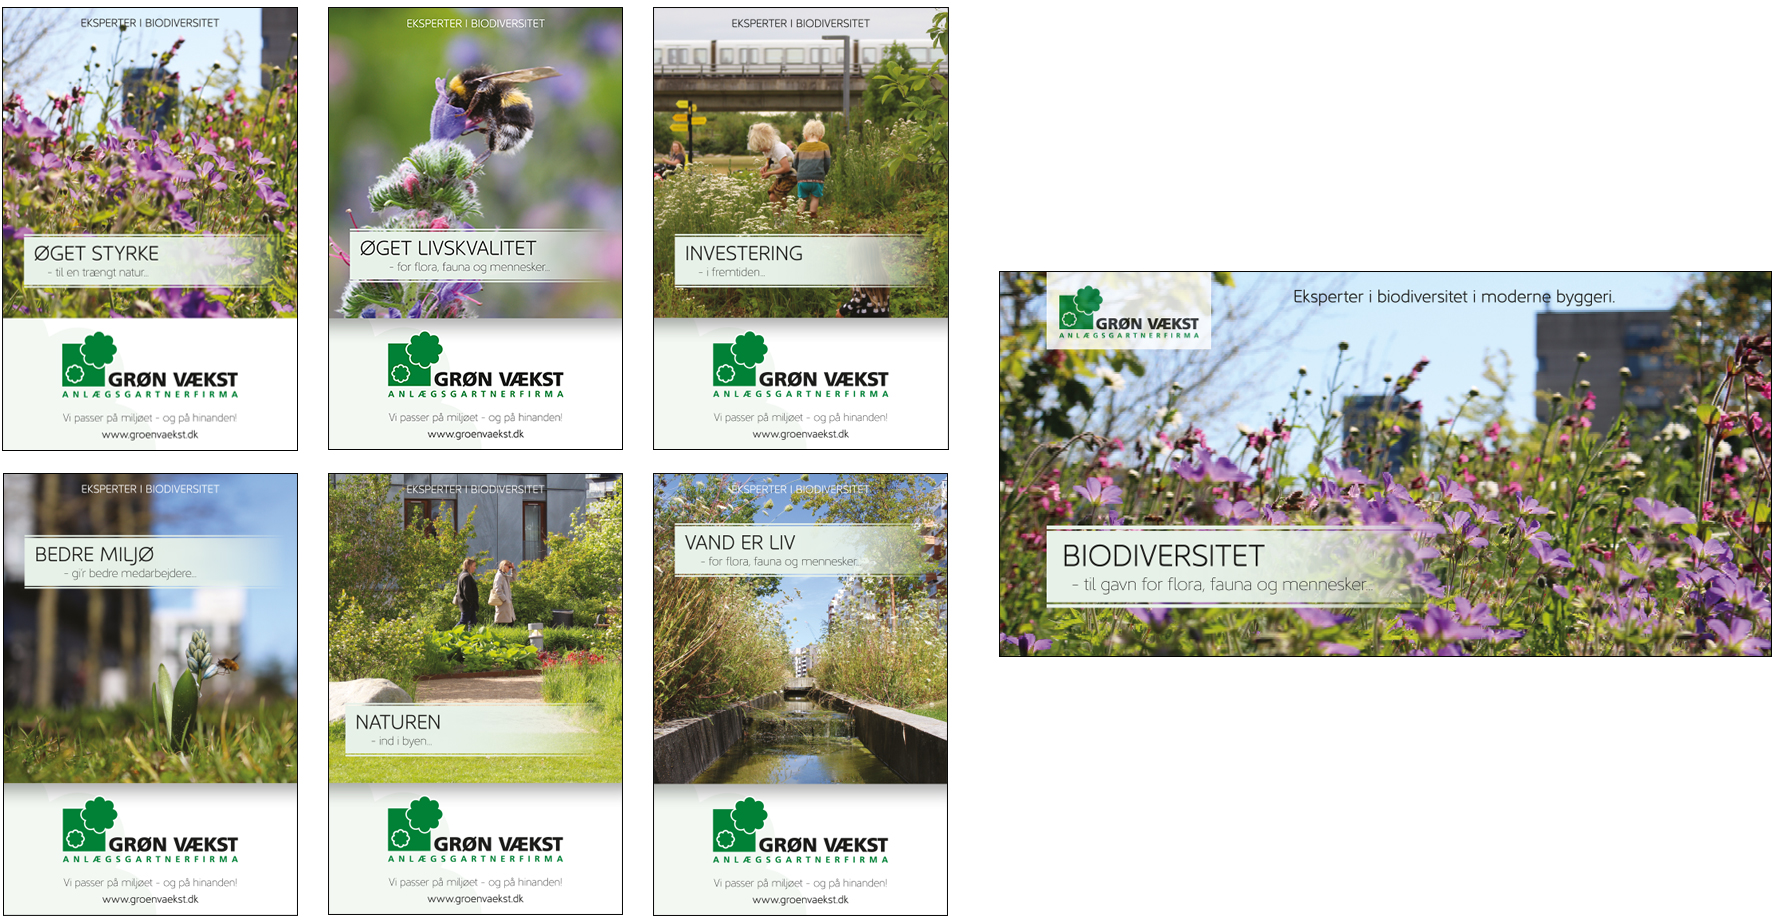 Biodiversitetskampagne-posters